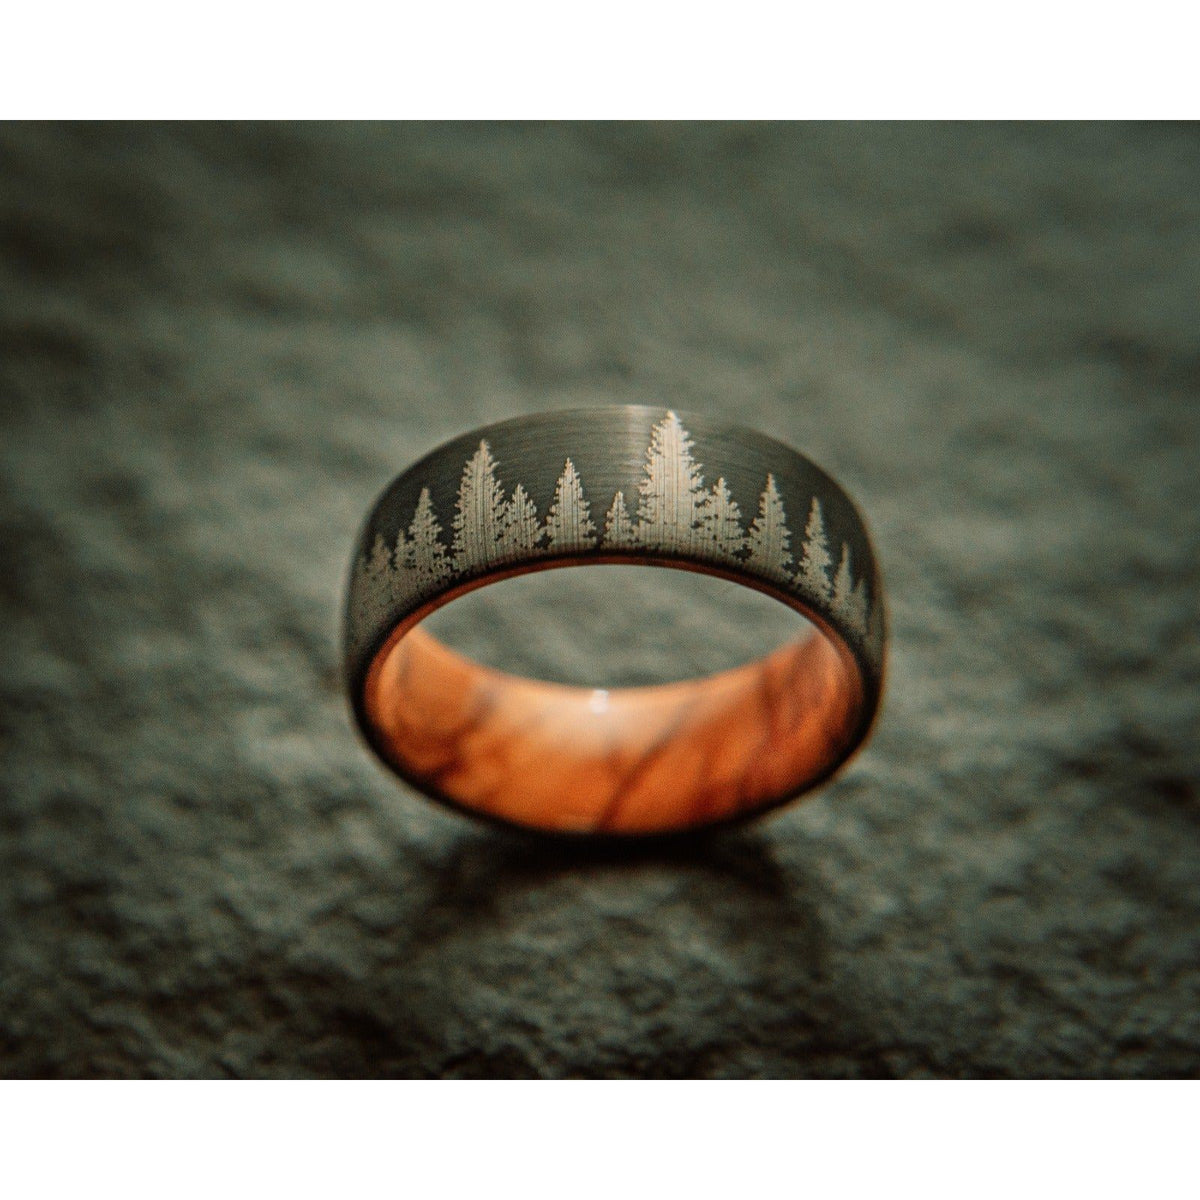 The “Adventurer” Ring by Vintage Gentlemen